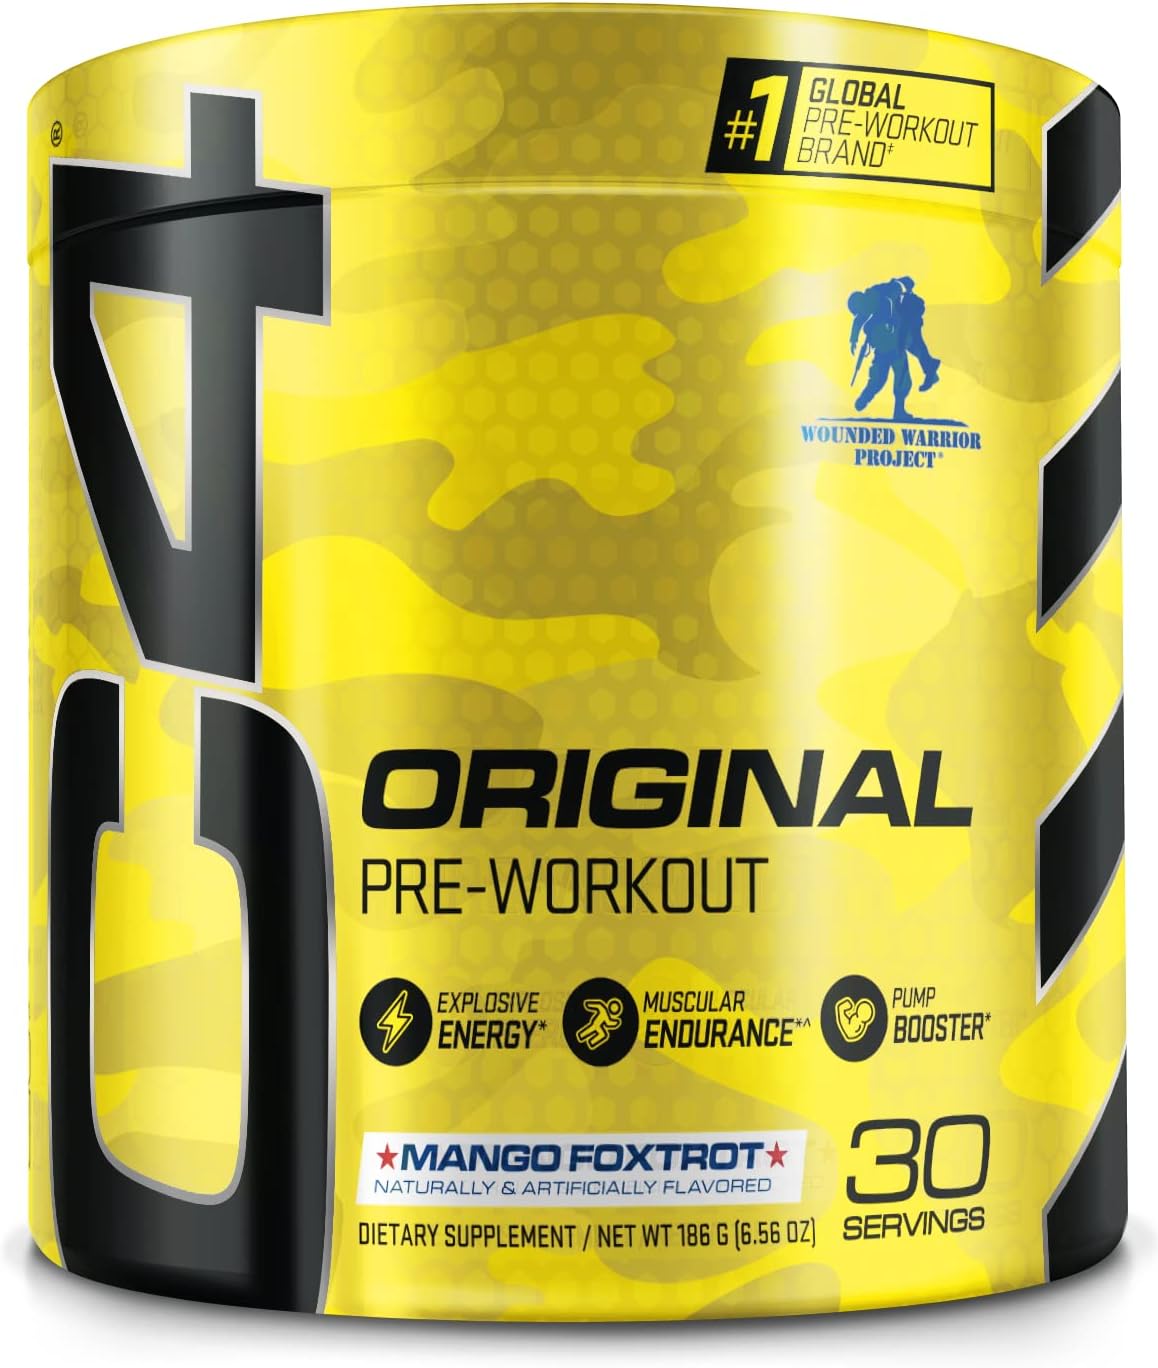 Cellucor C4 Original Pre Workout Powder Mango Foxtrot Sugar Free Preworkout Energy for Men & Women 150mg Caffeine + Beta Alanine + Creatine - 30 Servings (Packaging May Vary)